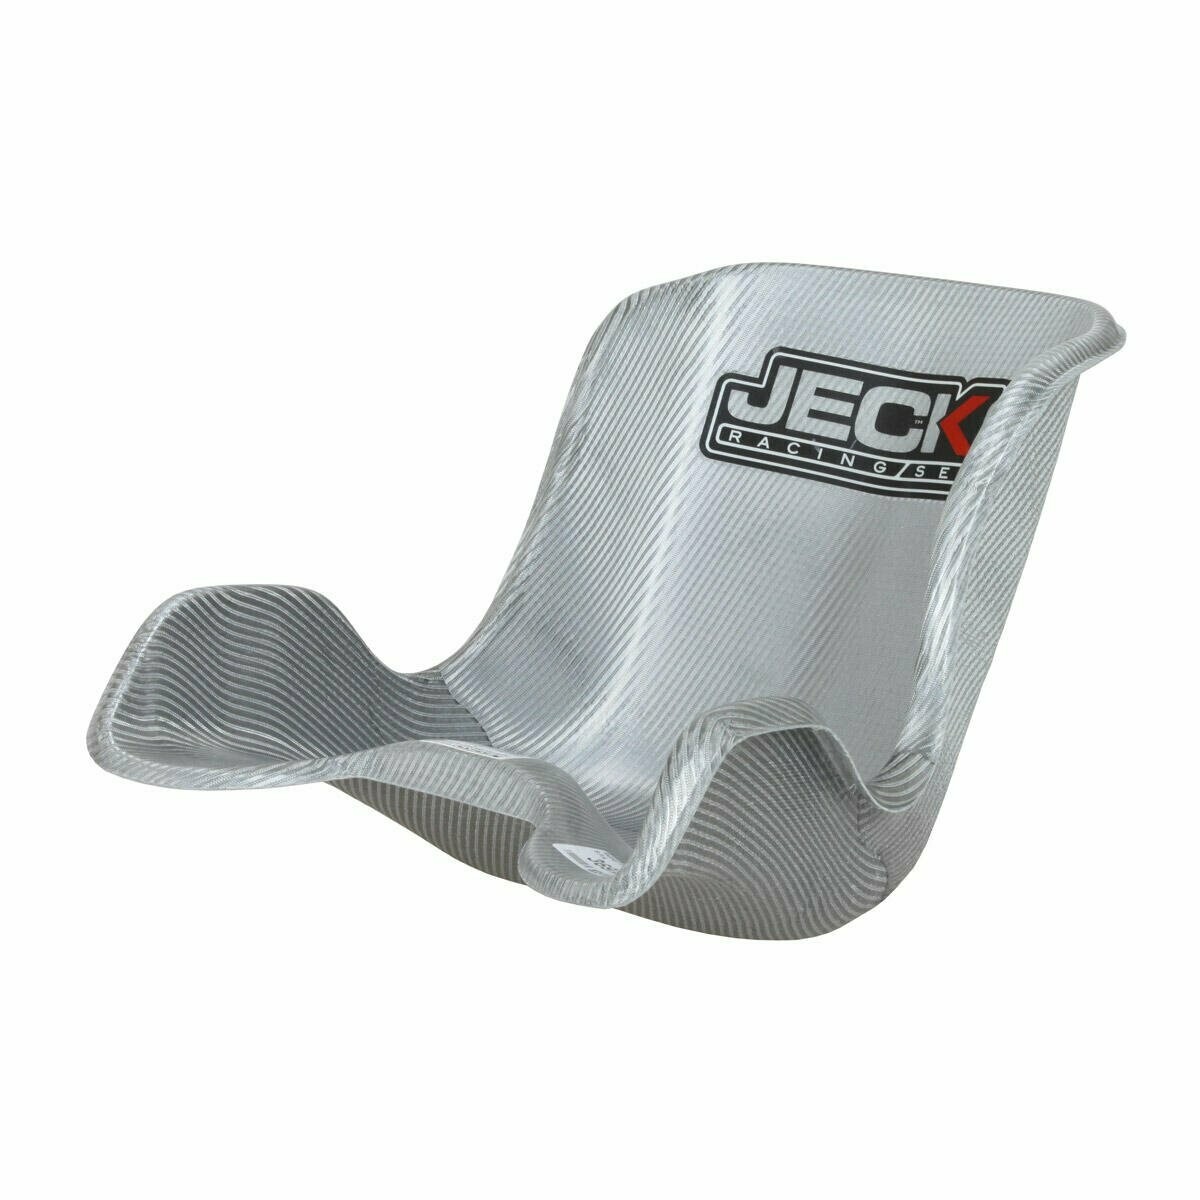 JECKO Seat - size A1